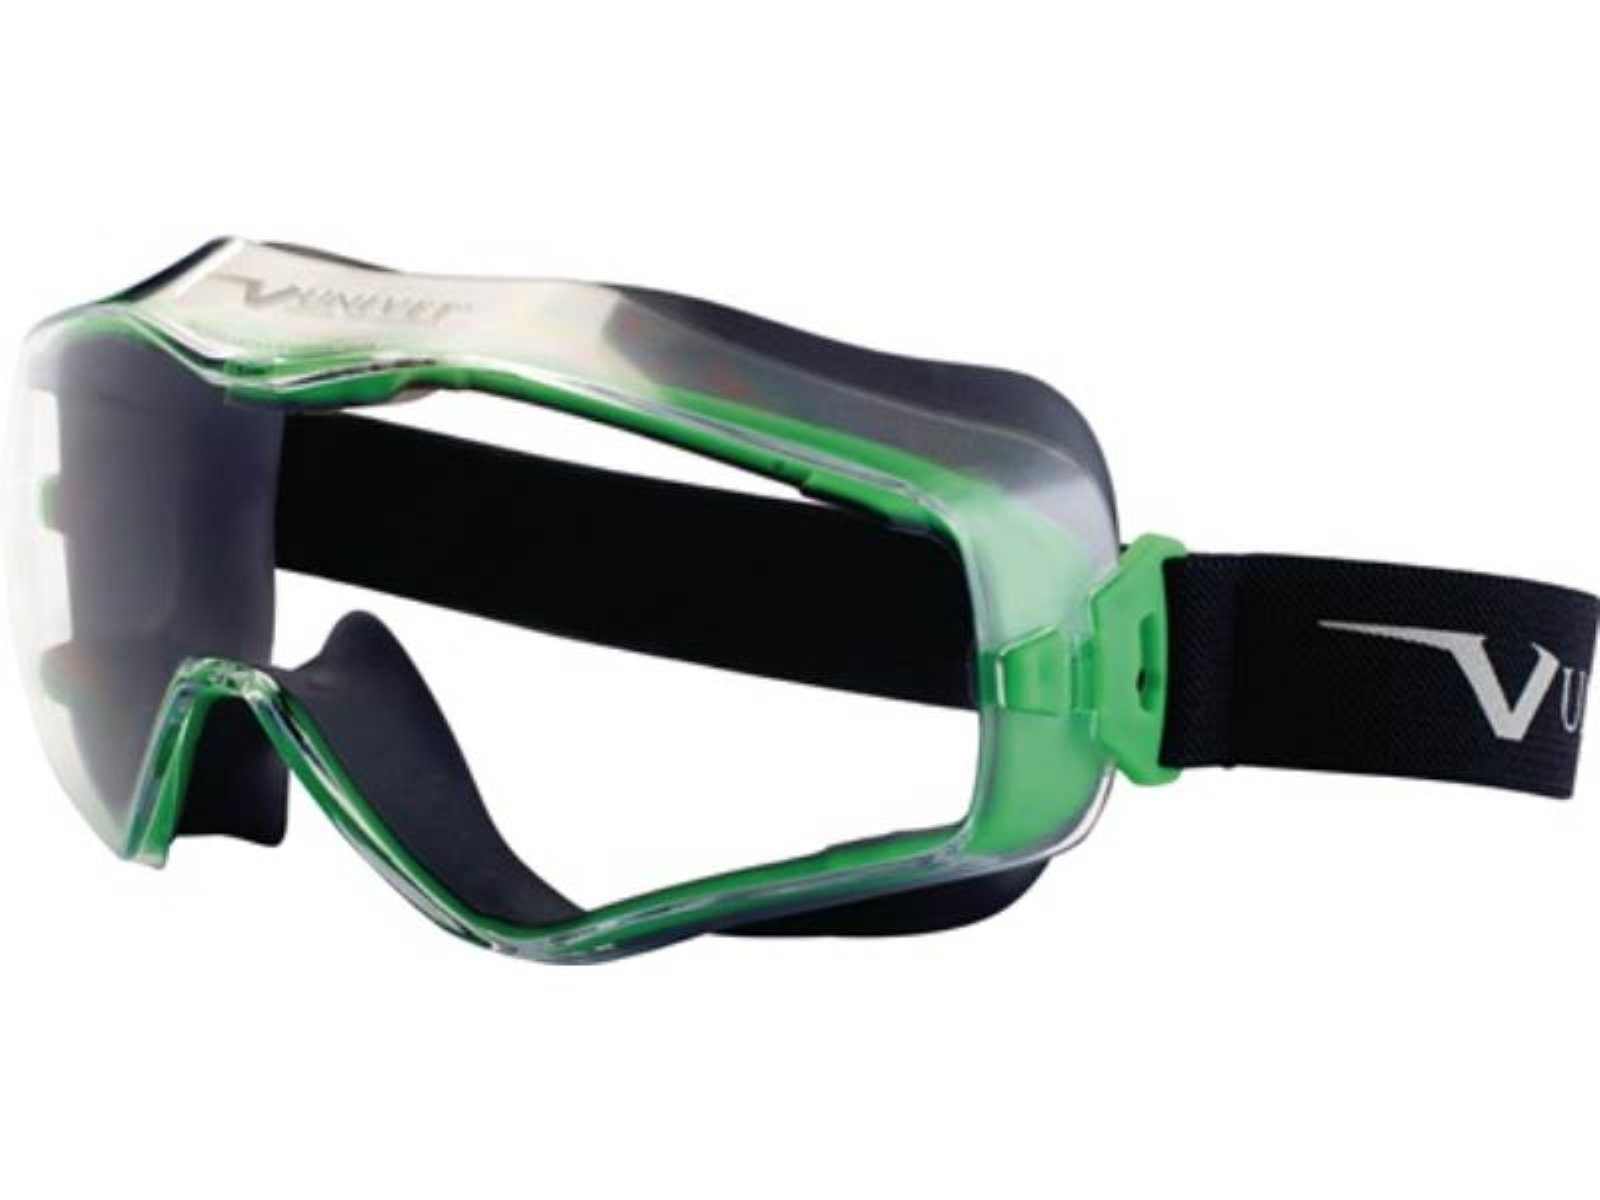 Univet Rahmen Vollsichtbrille 6x3 EN 166,EN 170 Rahmen gunmetallic/grün,Scheibe kla